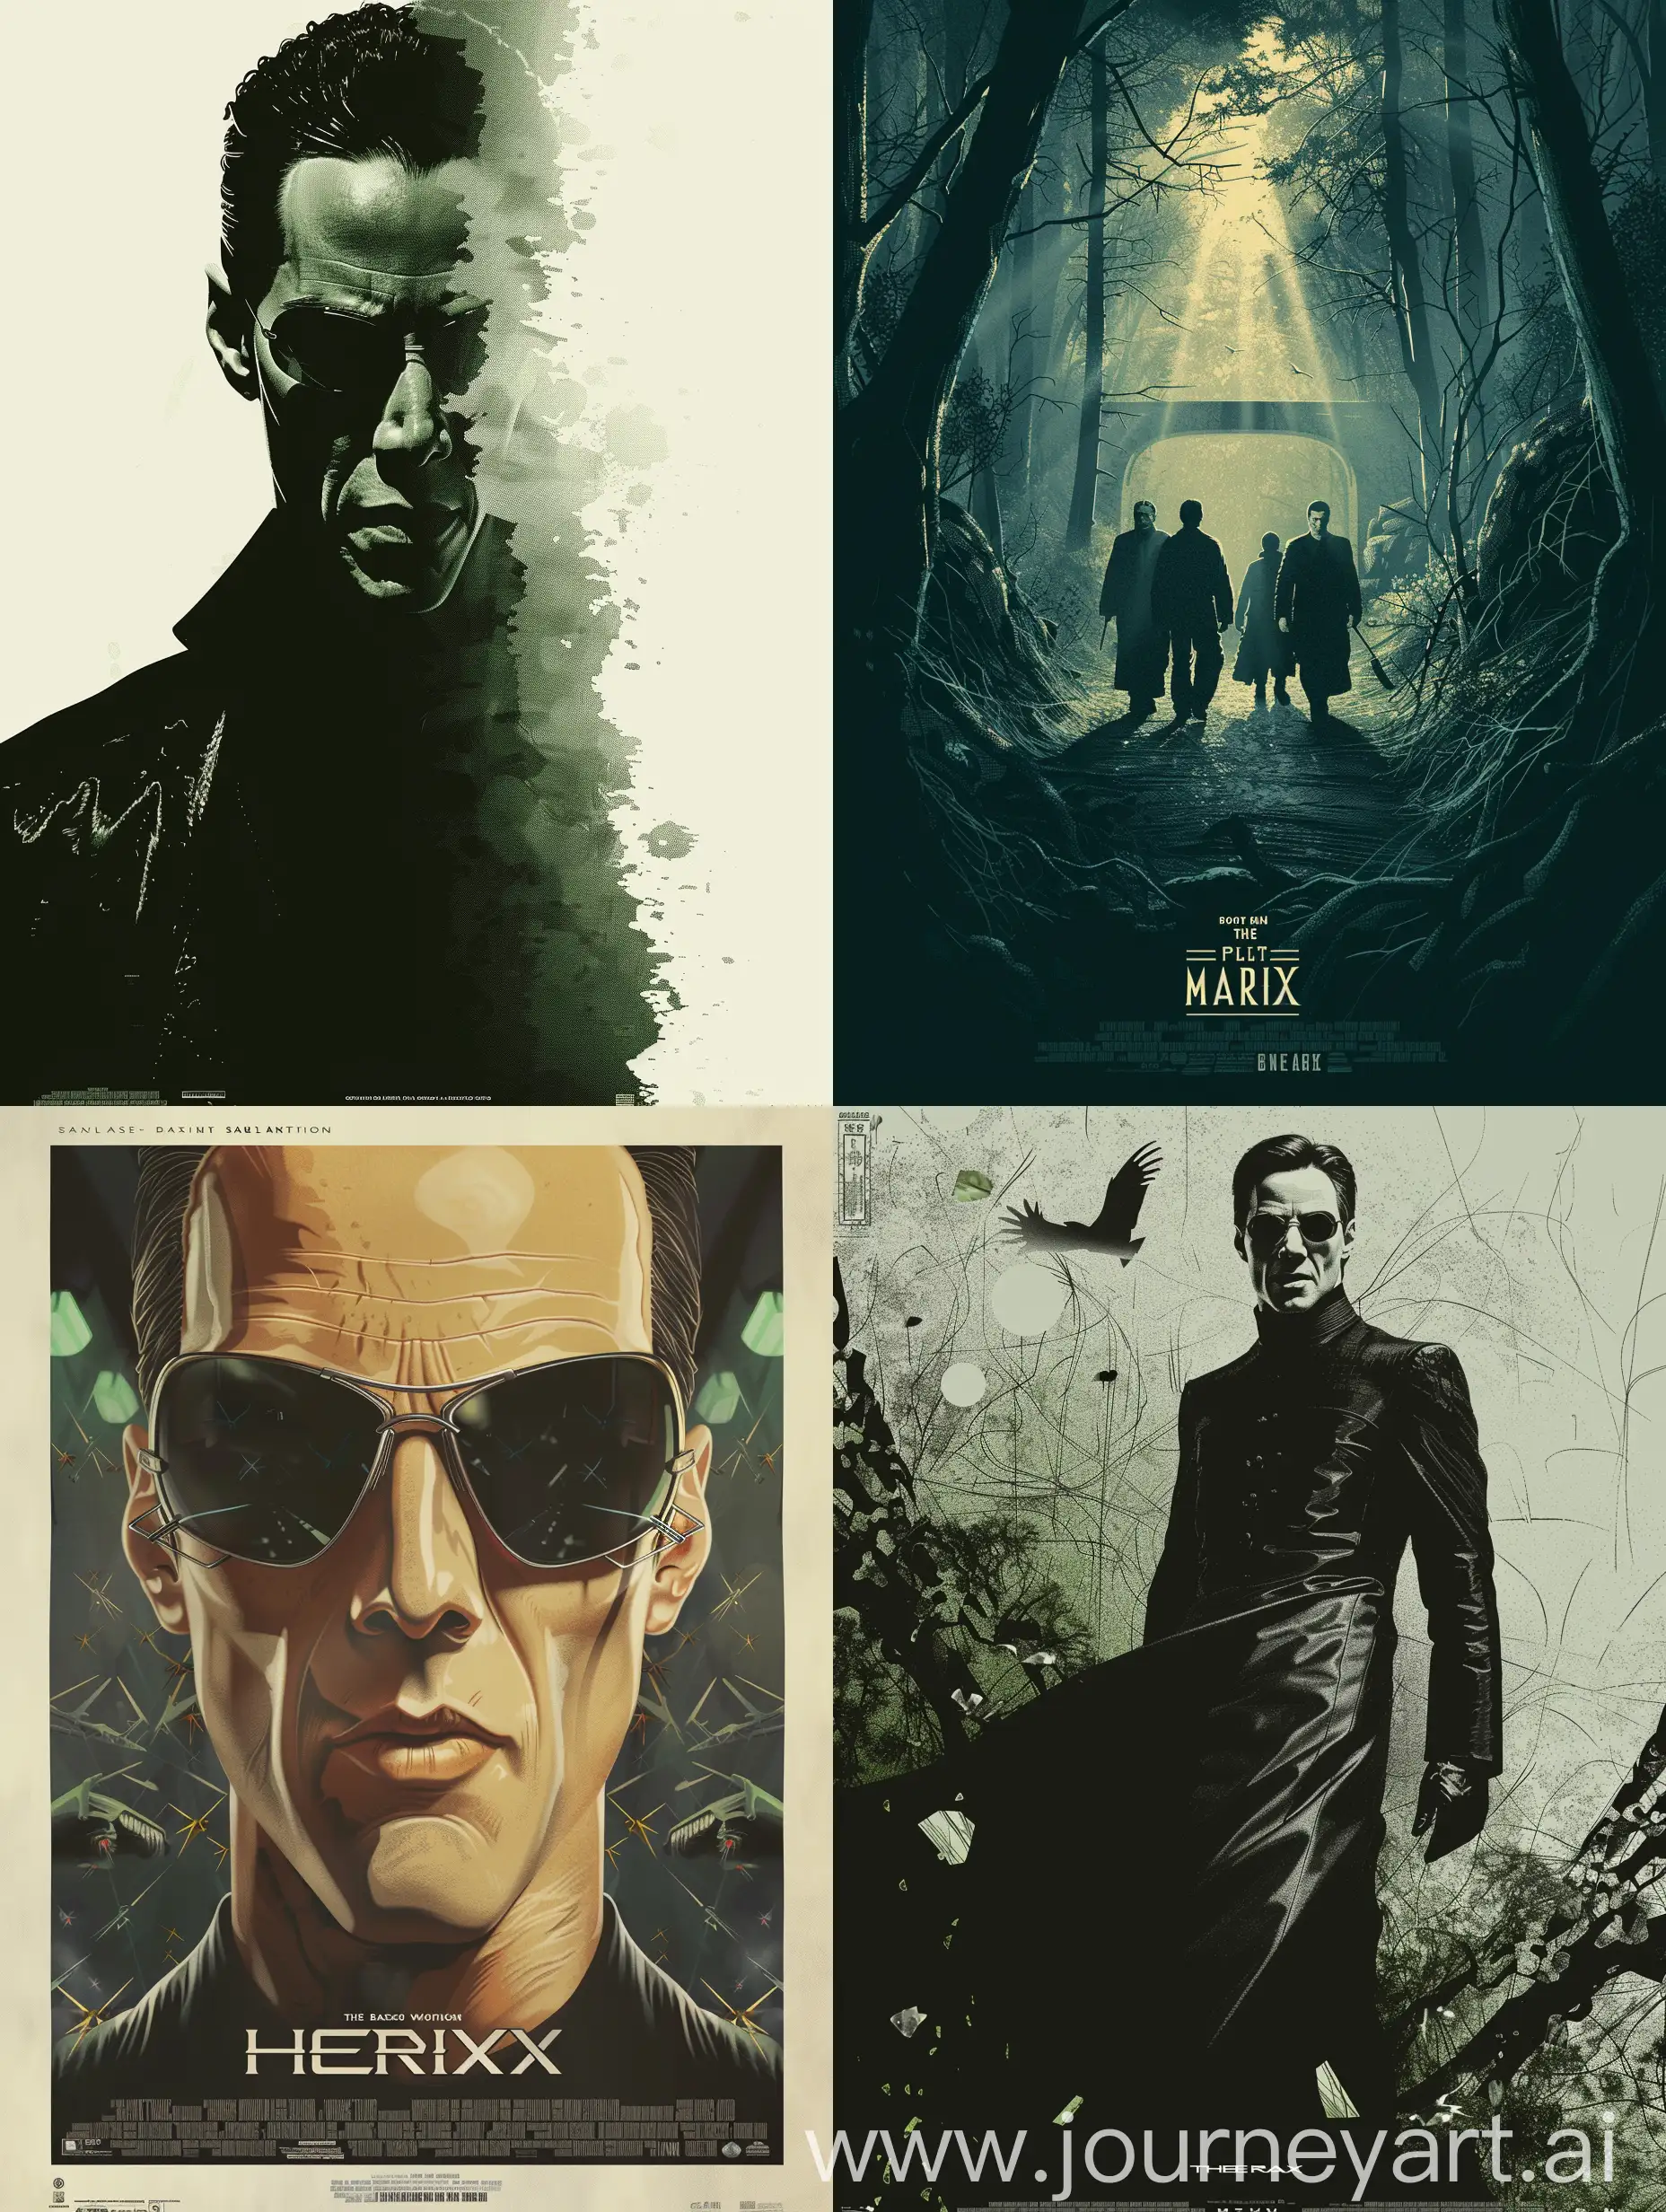 Matrix-Movie-Poster-Saul-Bass-Style-Artwork